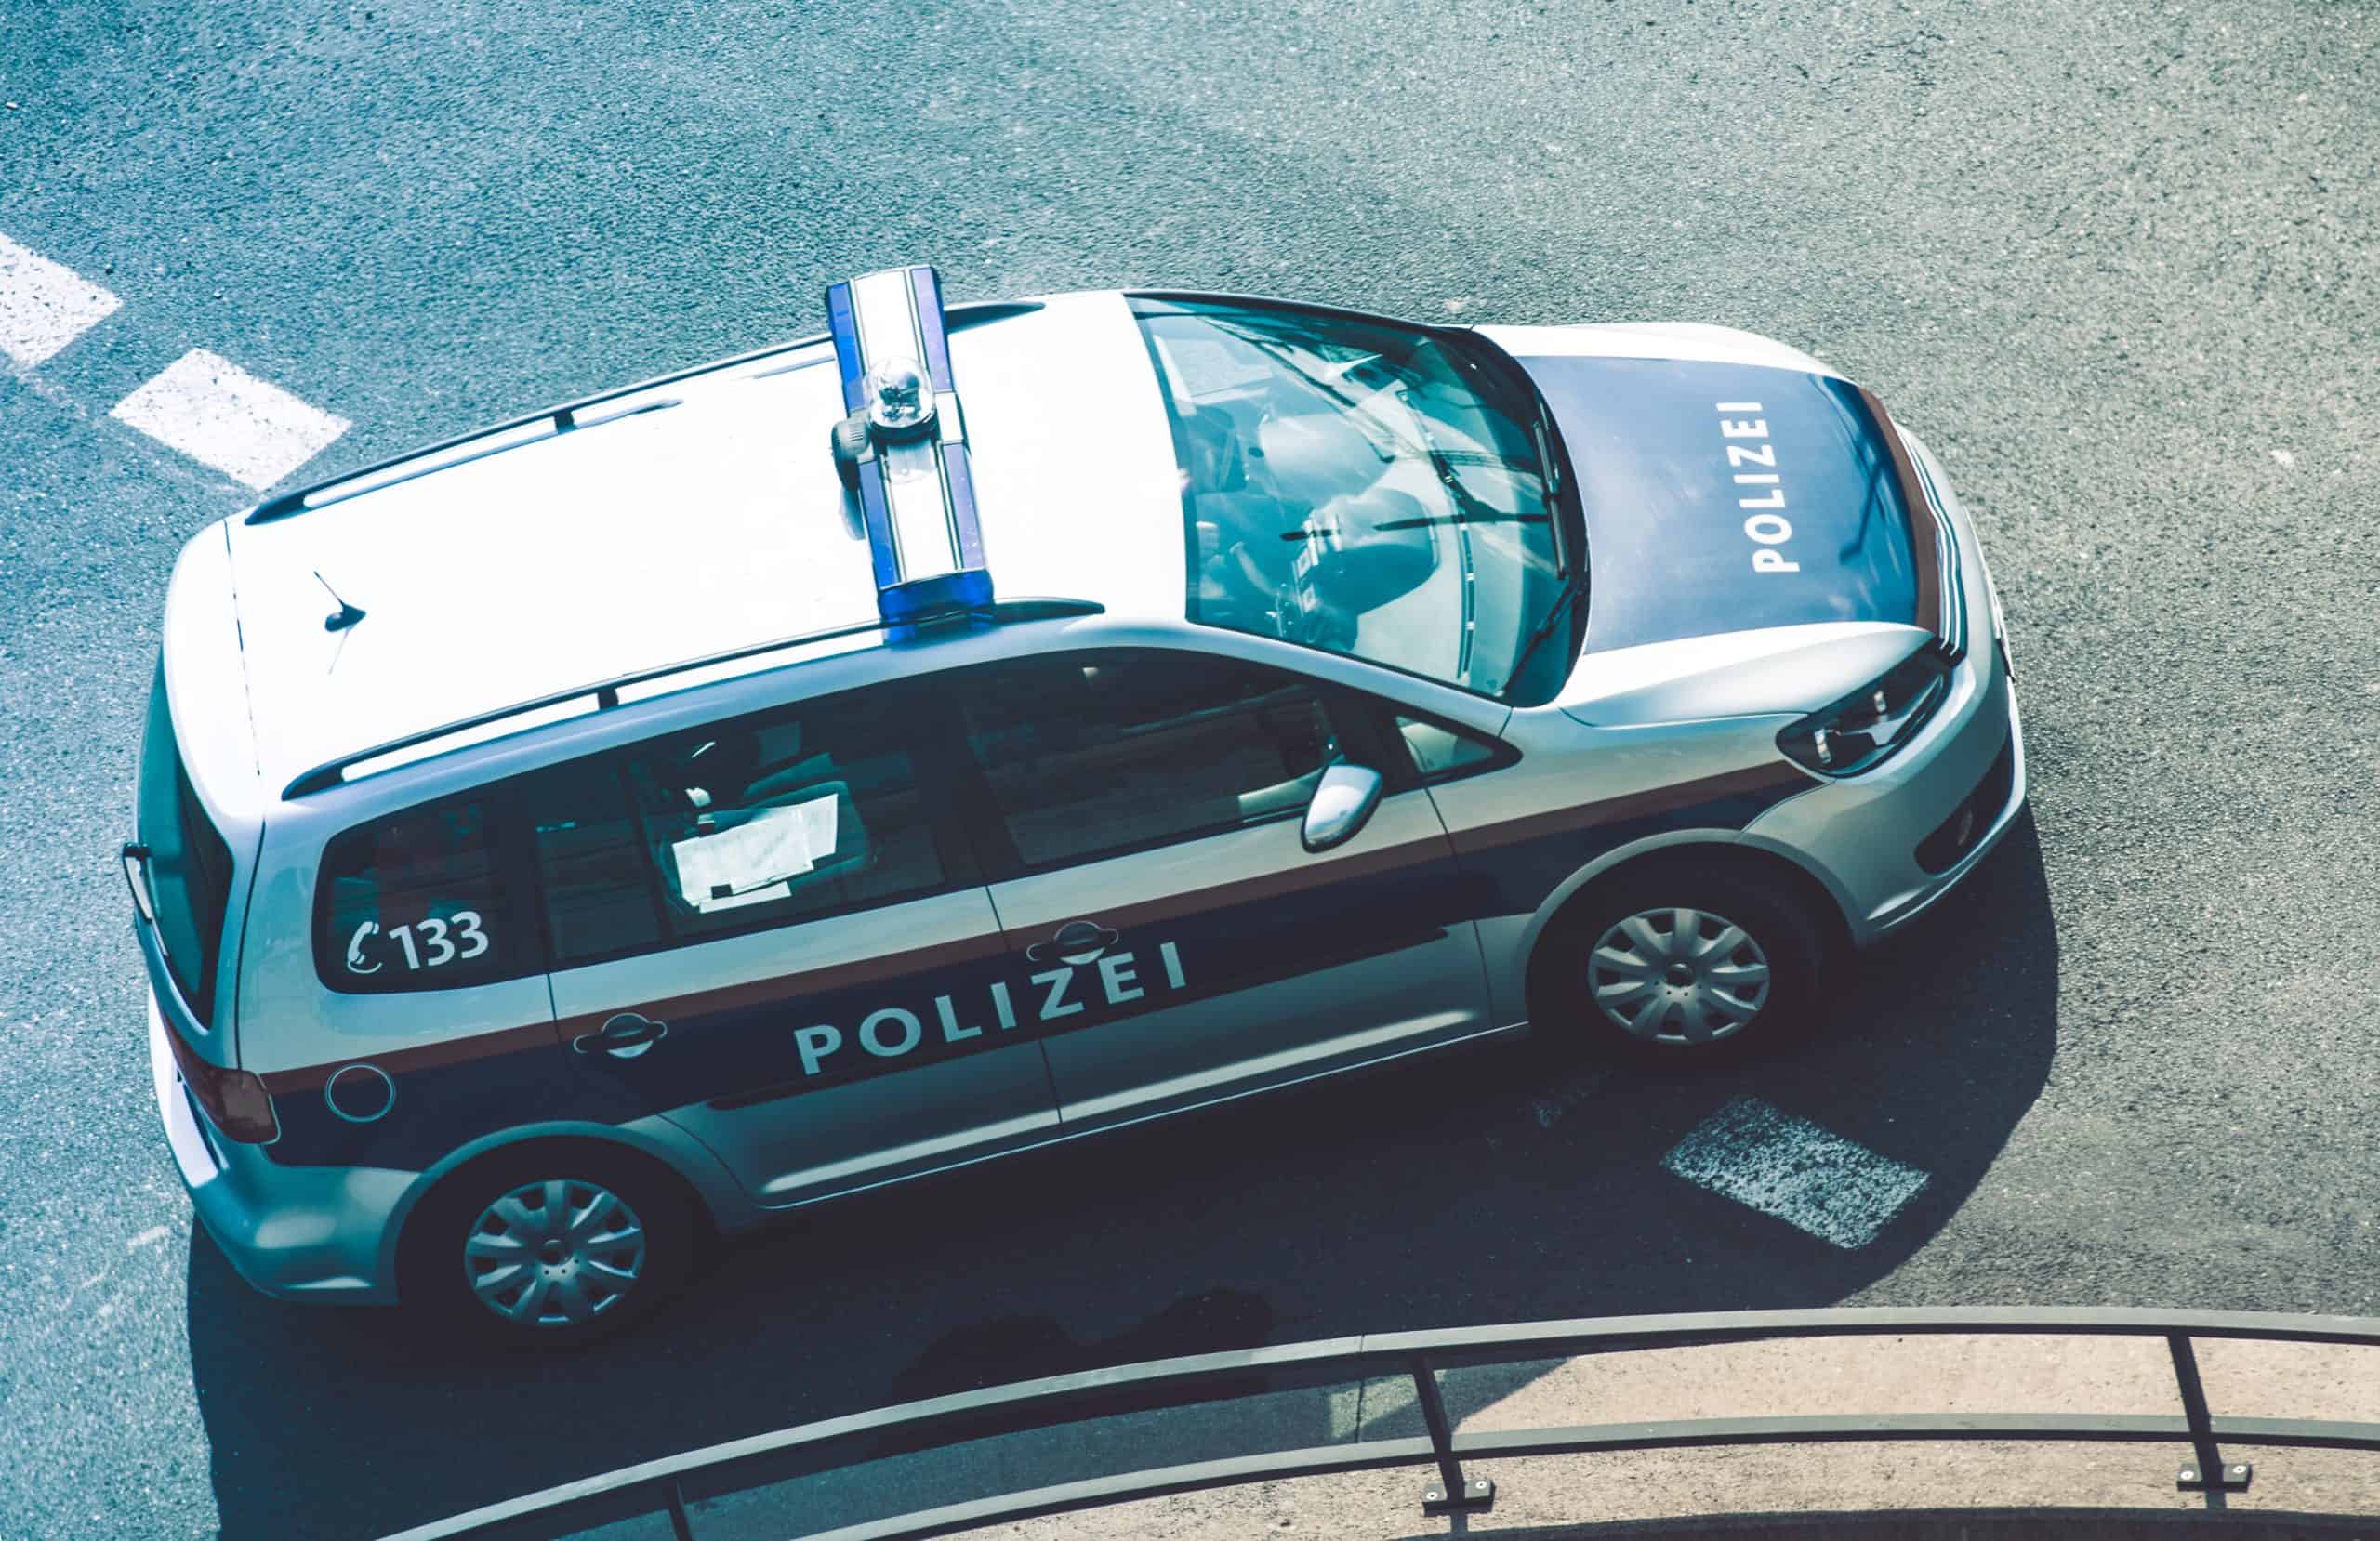 Federal Police Cruiser in Austria. Bird Eye View. Police Vehicle on the City Street. Polizei.